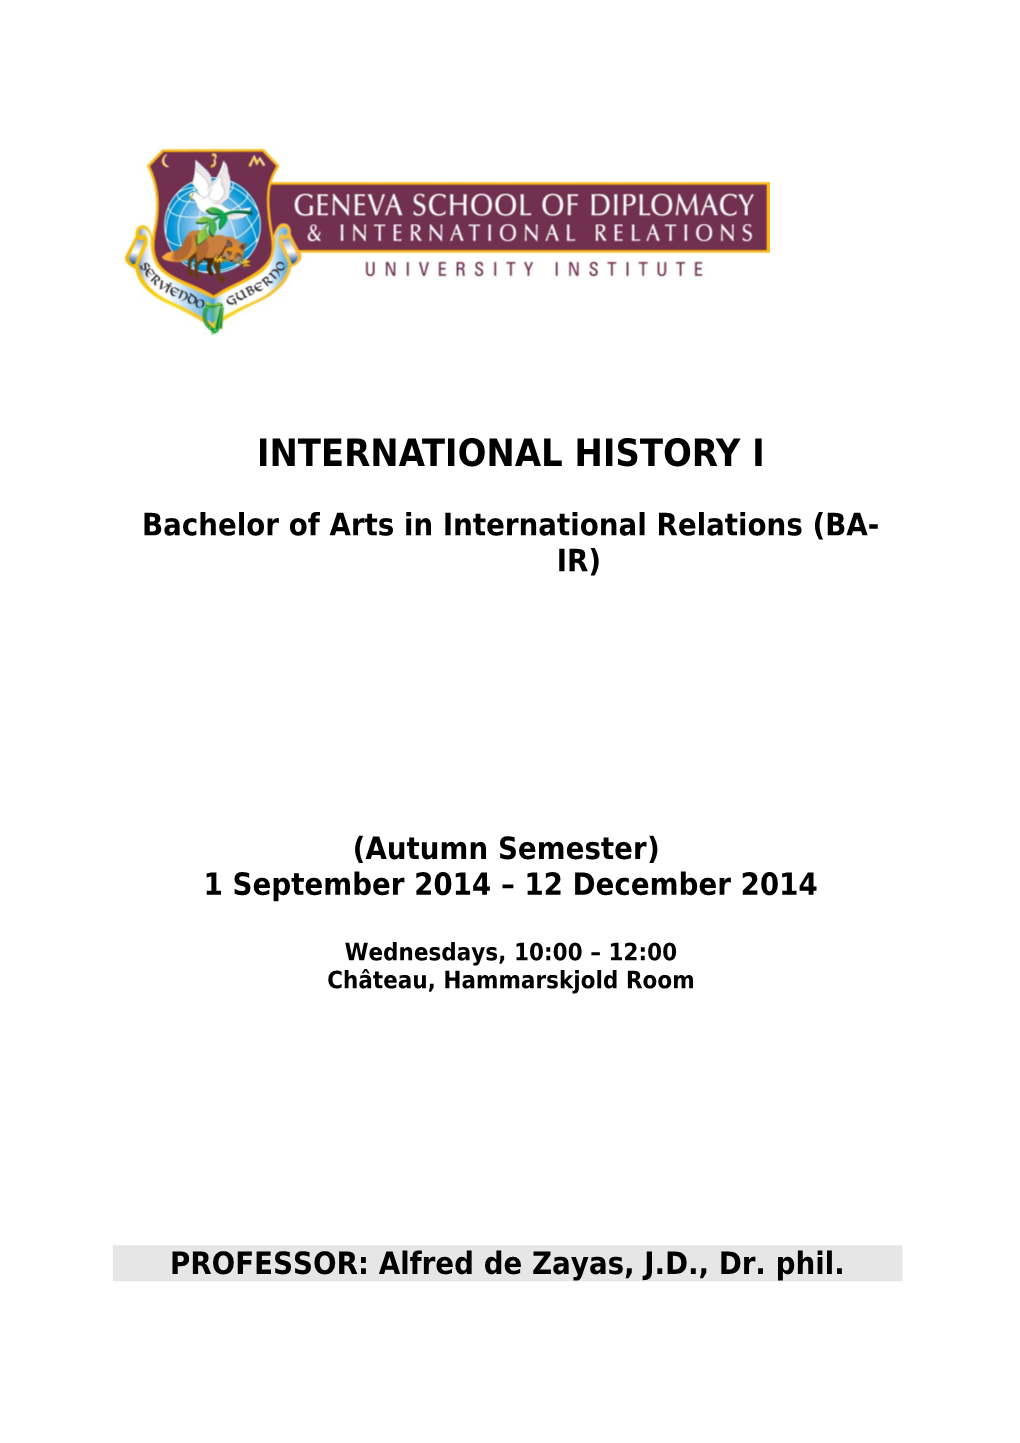 Bachelor of Arts in International Relations (BA-IR)